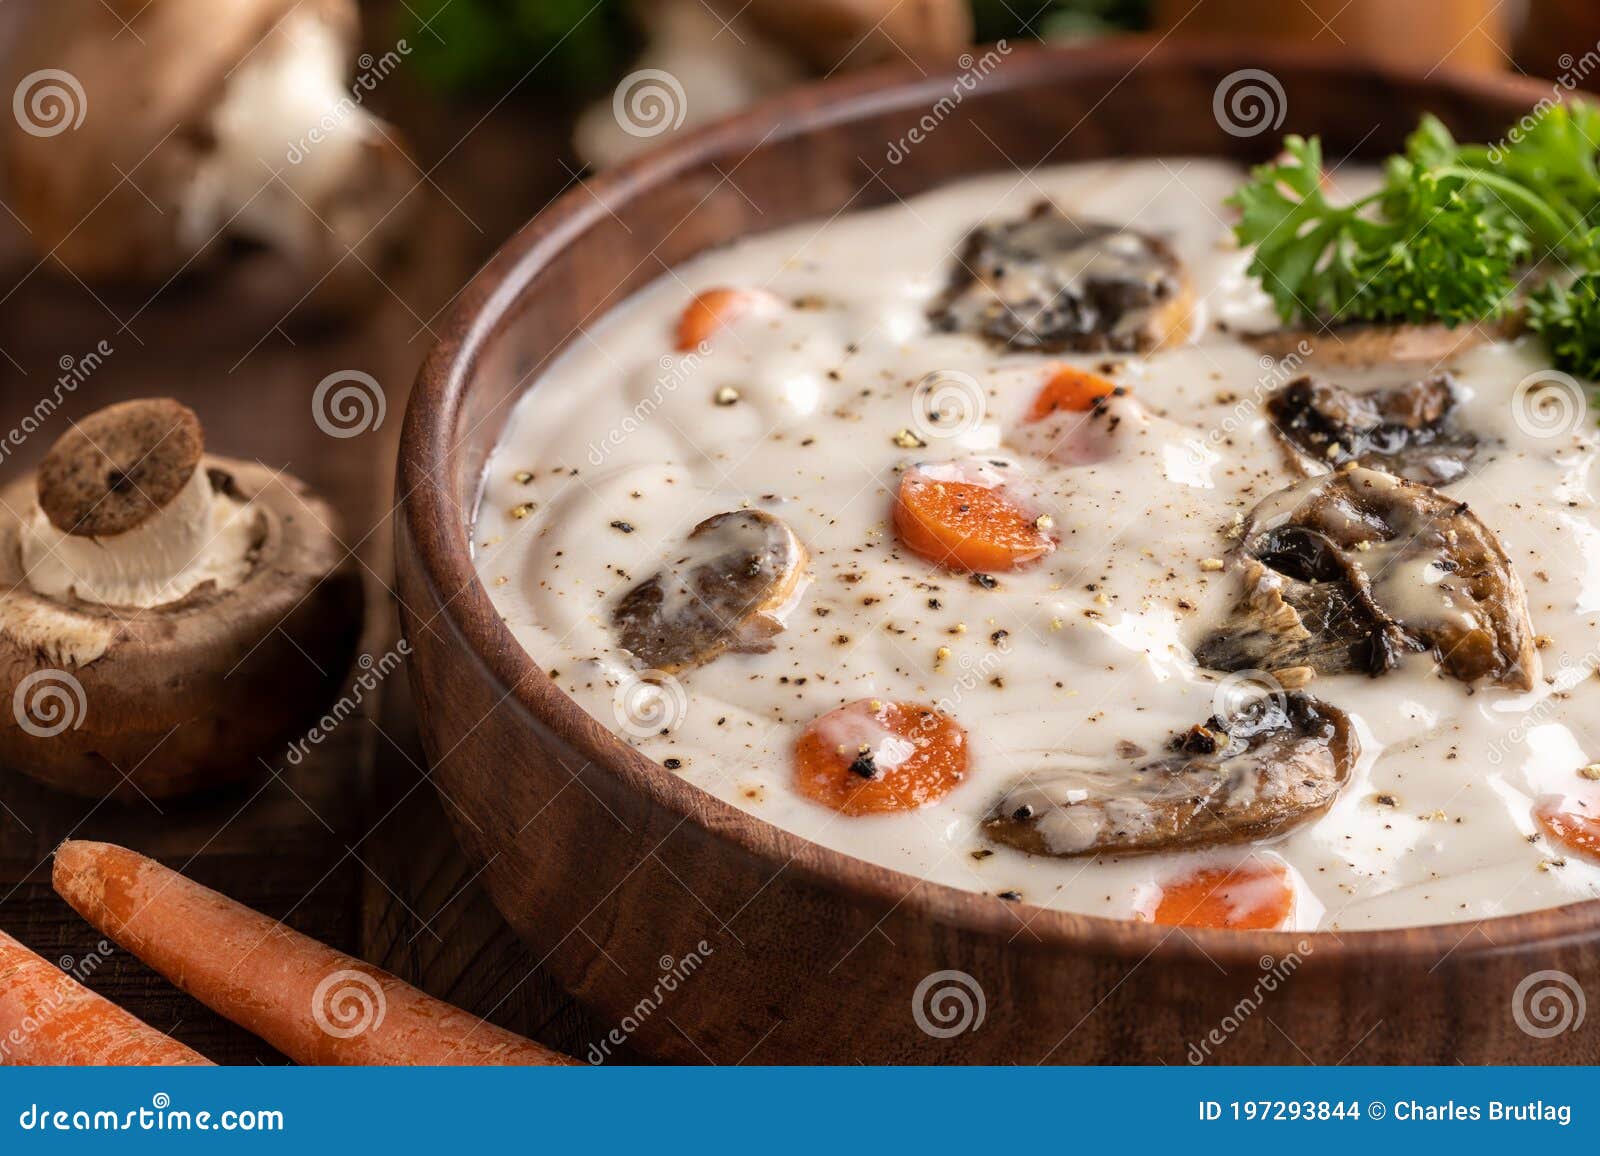 bowl of creamy mushroom soup